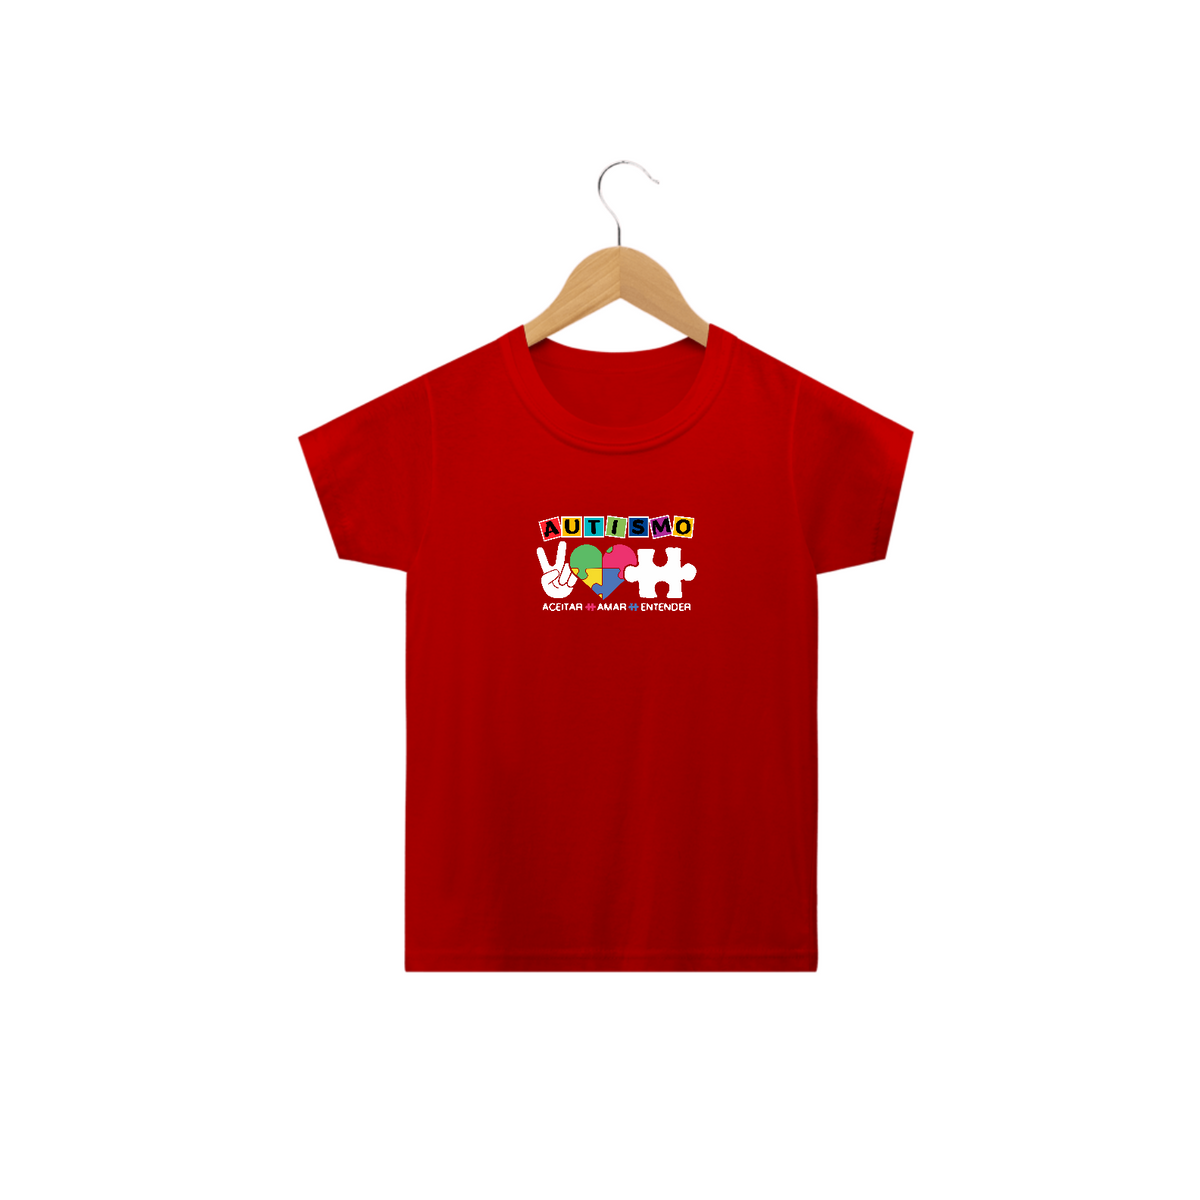 Nome do produto: T-shirt Infantil - autismo (Autismo: aceitar, amar, entender)